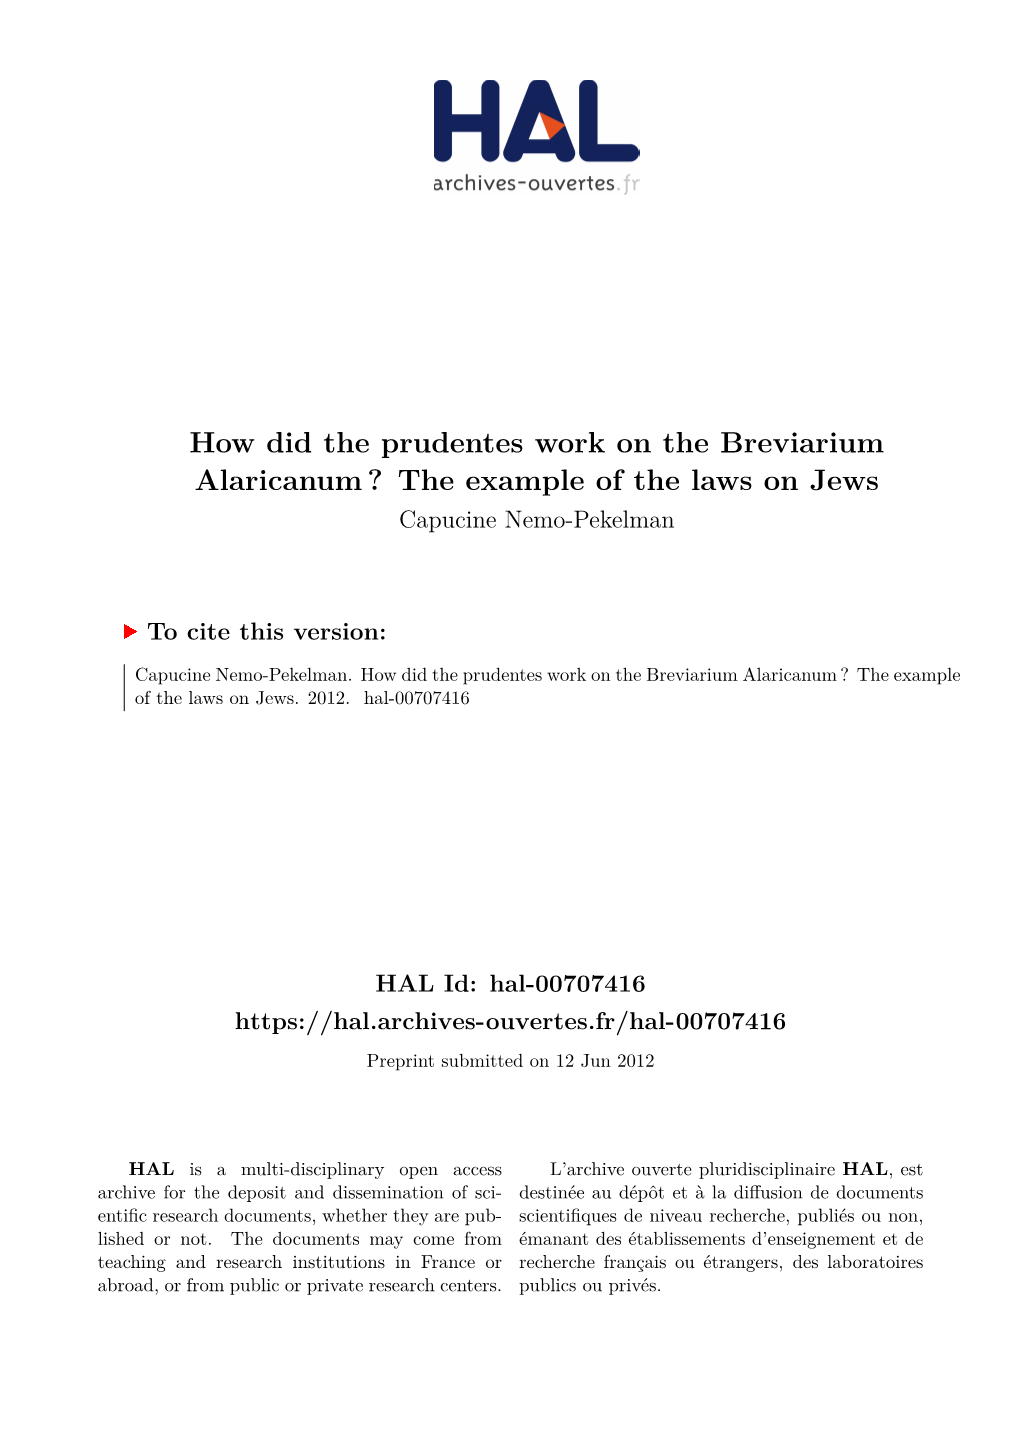 How Did the Prudentes Work on the Breviarium Alaricanum? The